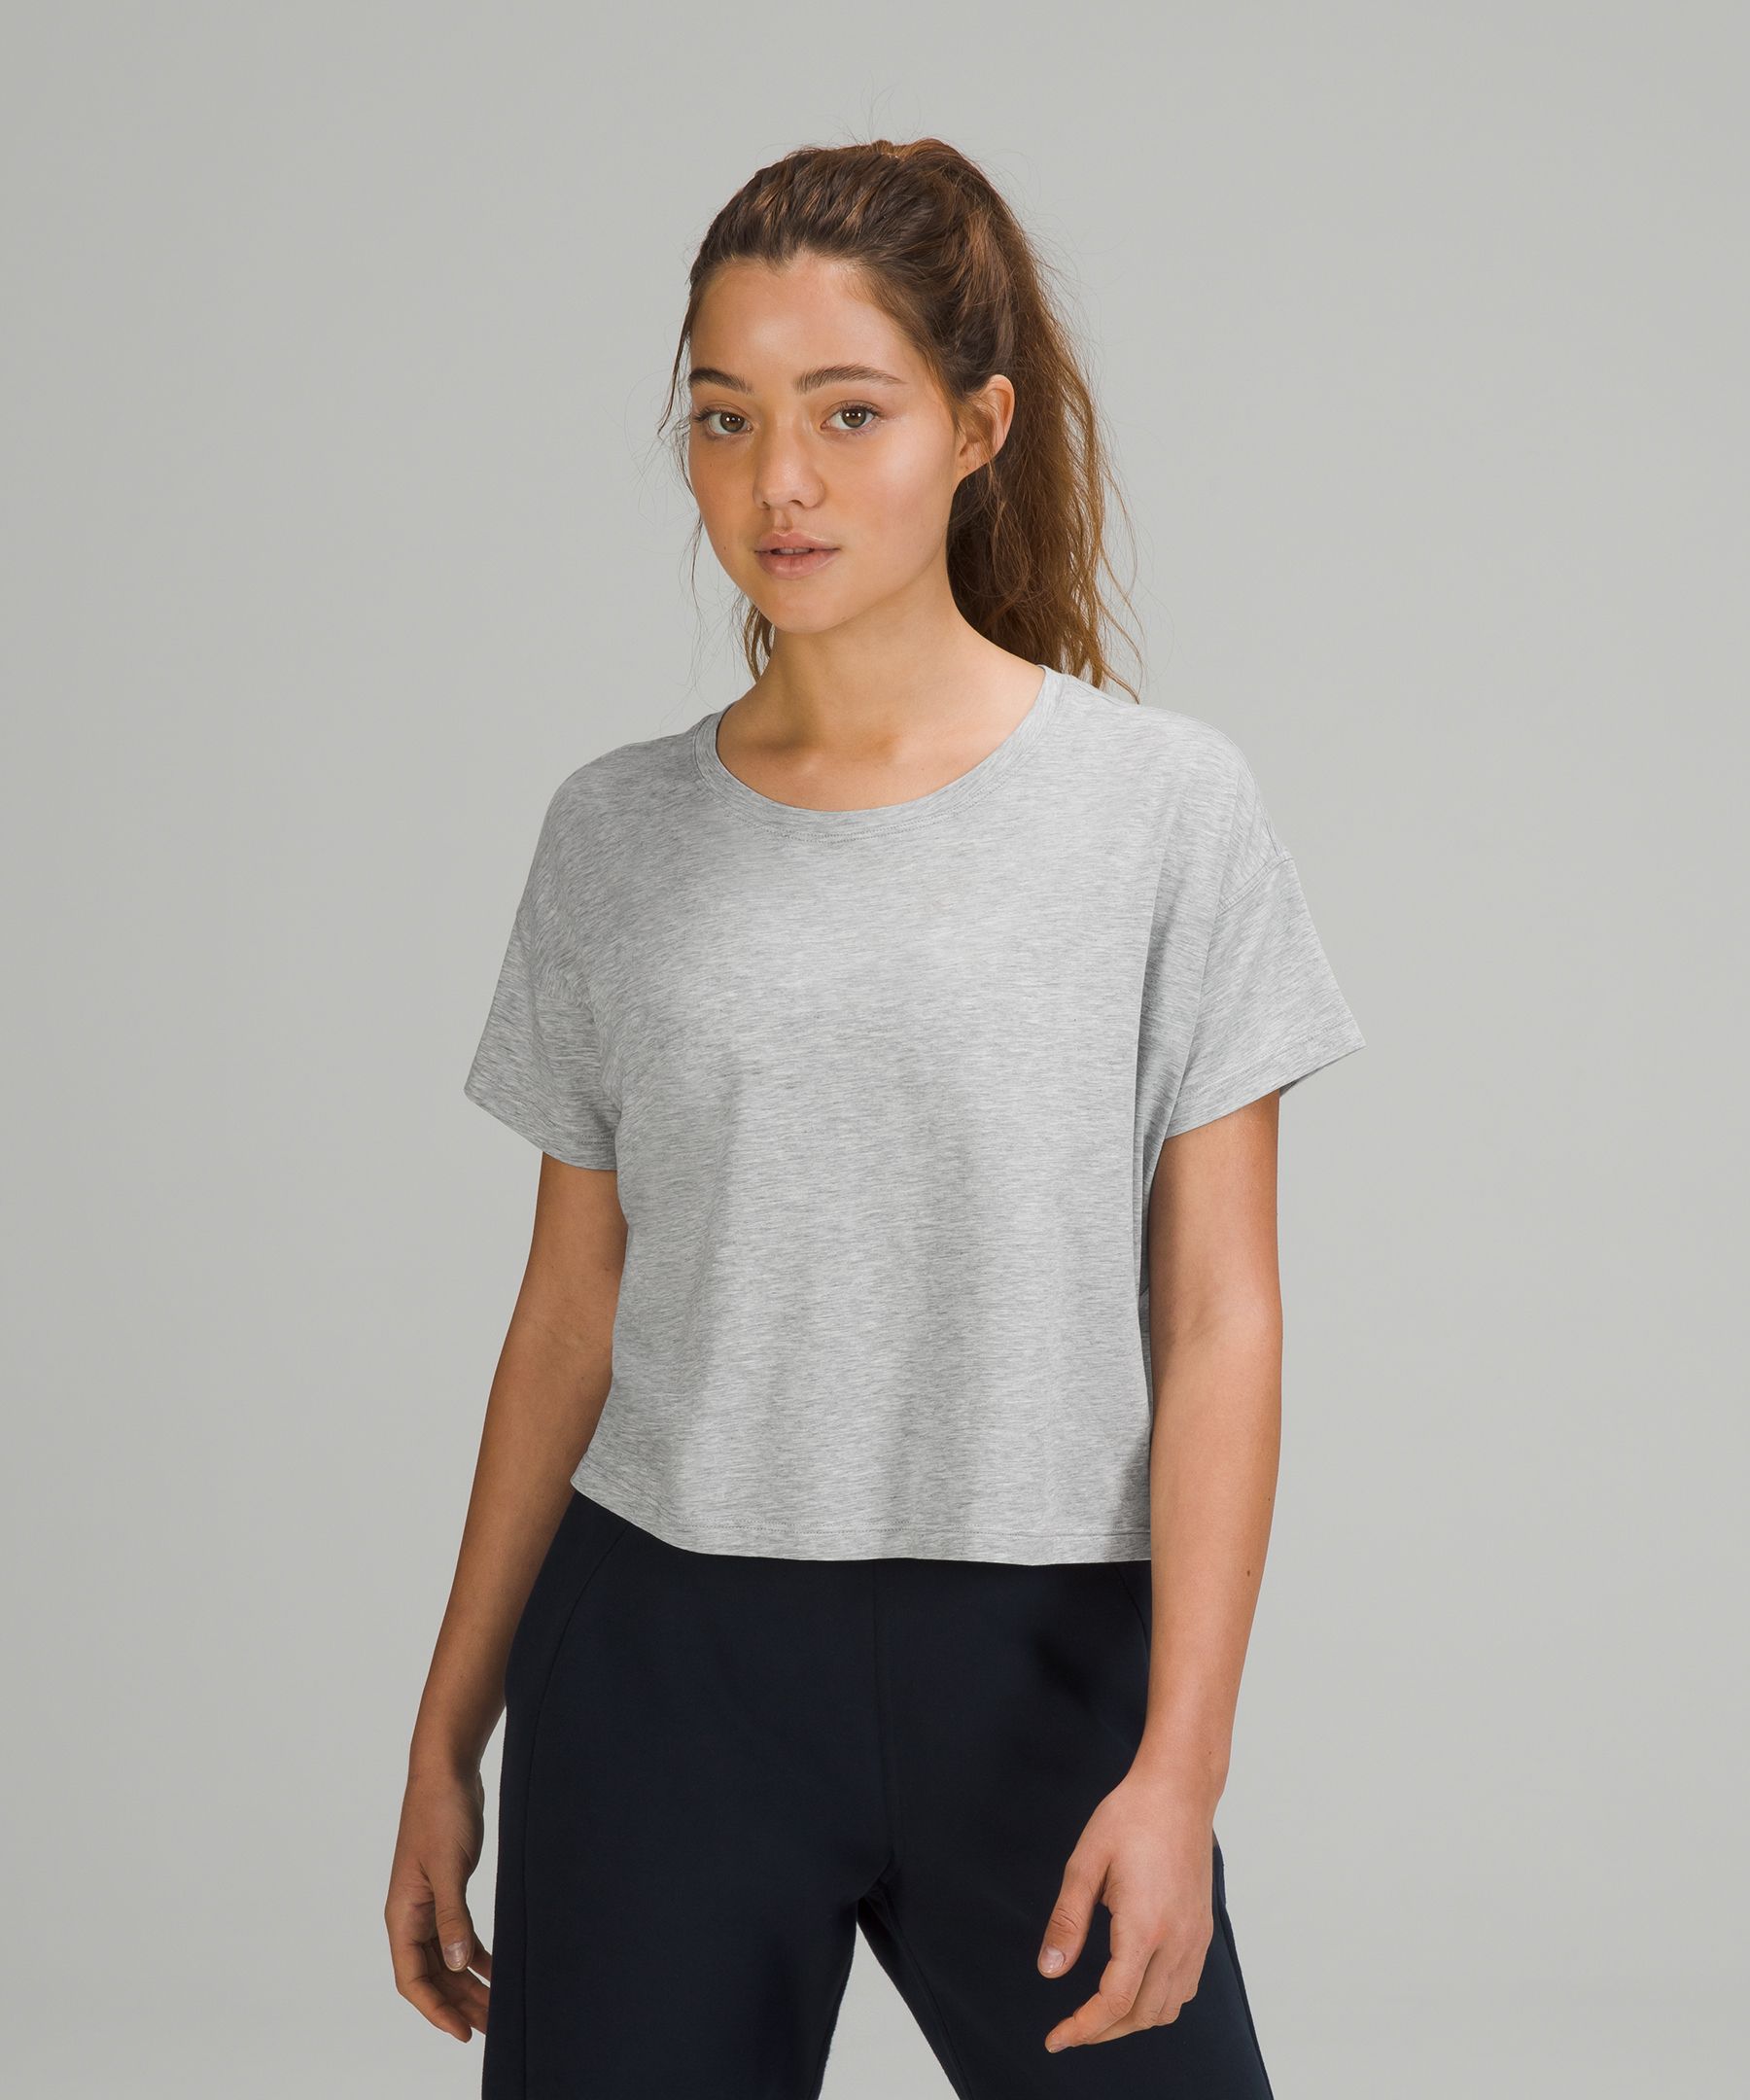 Lululemon Cates T-shirt In Heathered Core Light Grey